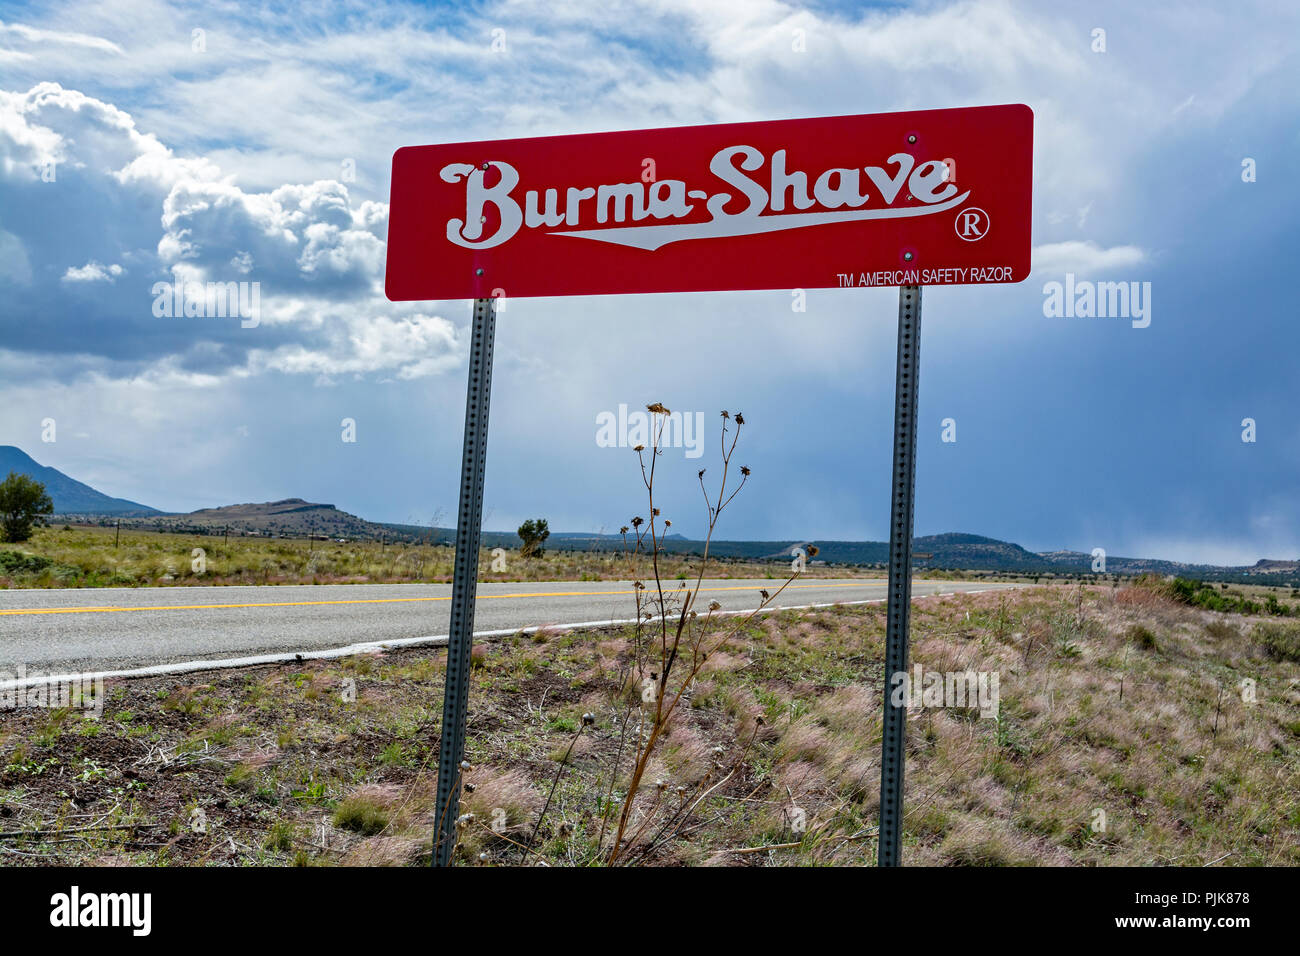 Arizona, Route 66, Burma-Shave roadside advertising sign Stock Photo